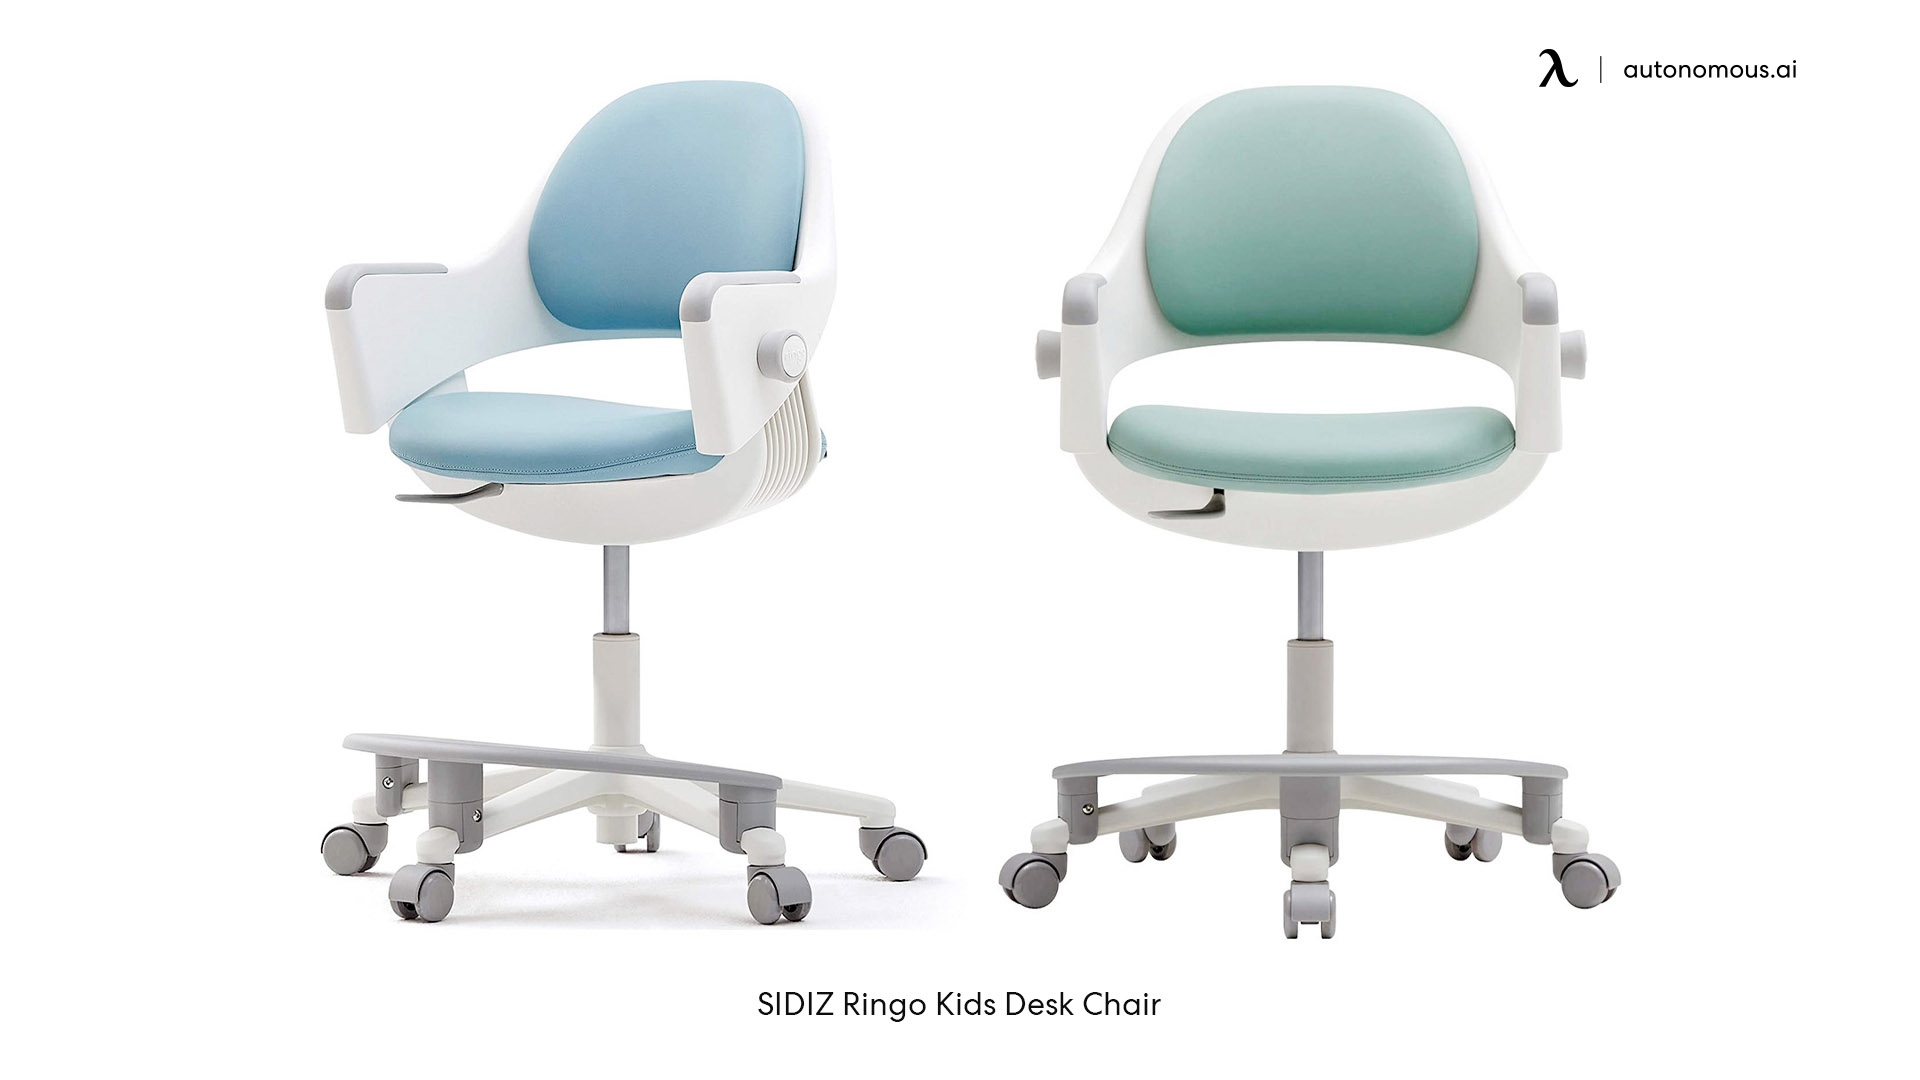 SIDIZ Ringo Kids Desk Chair